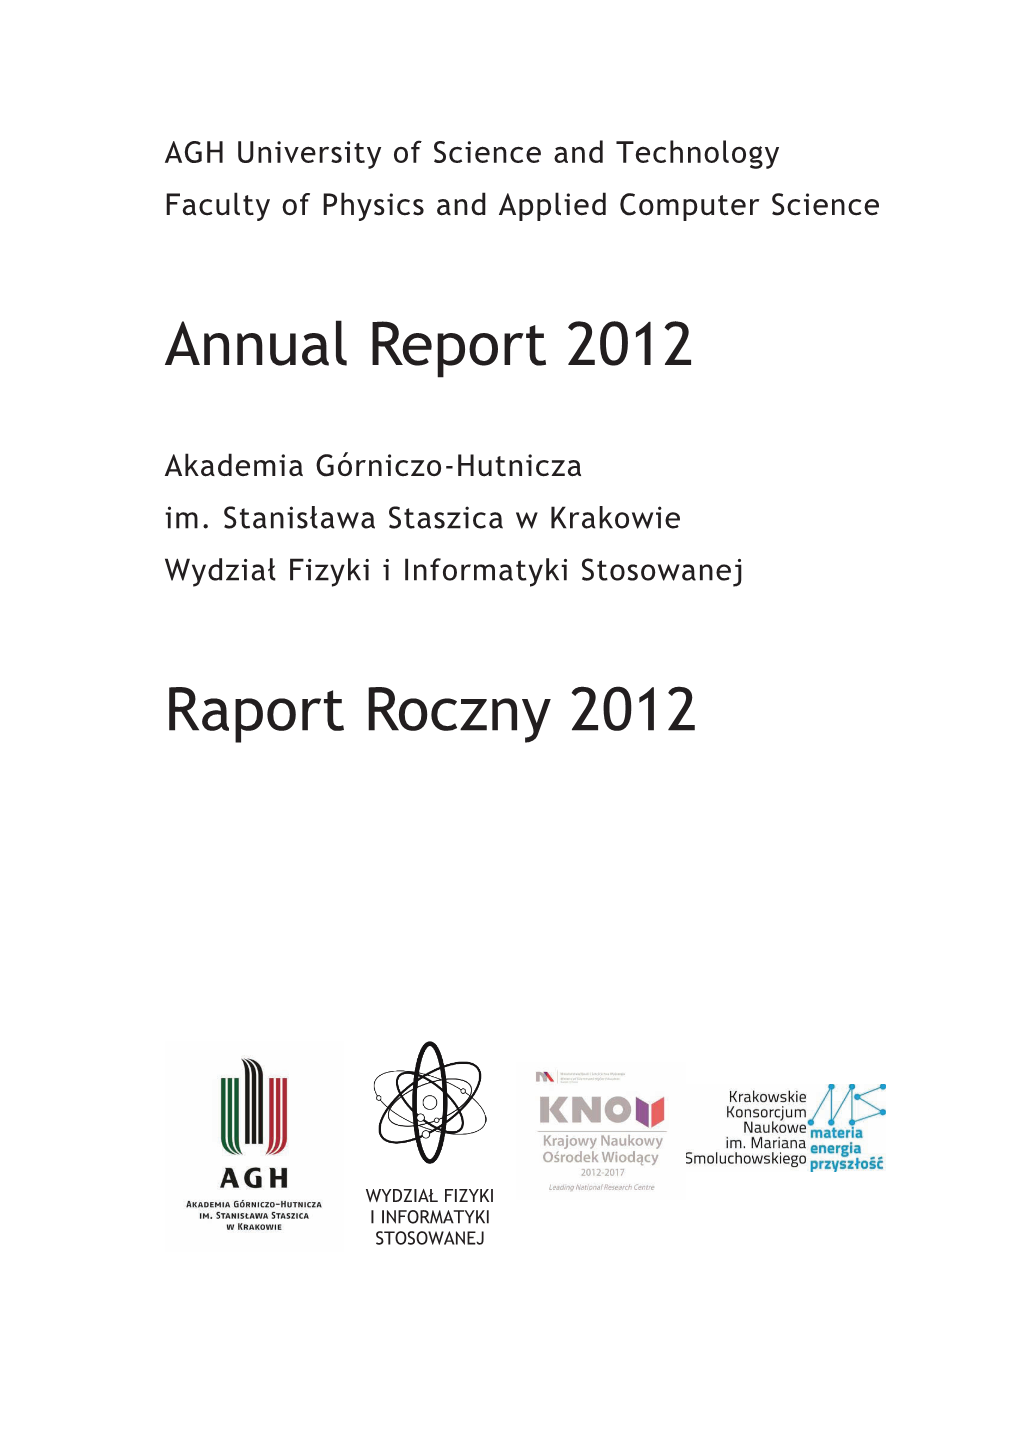 Annual Report 2012 Raport Roczny 2012